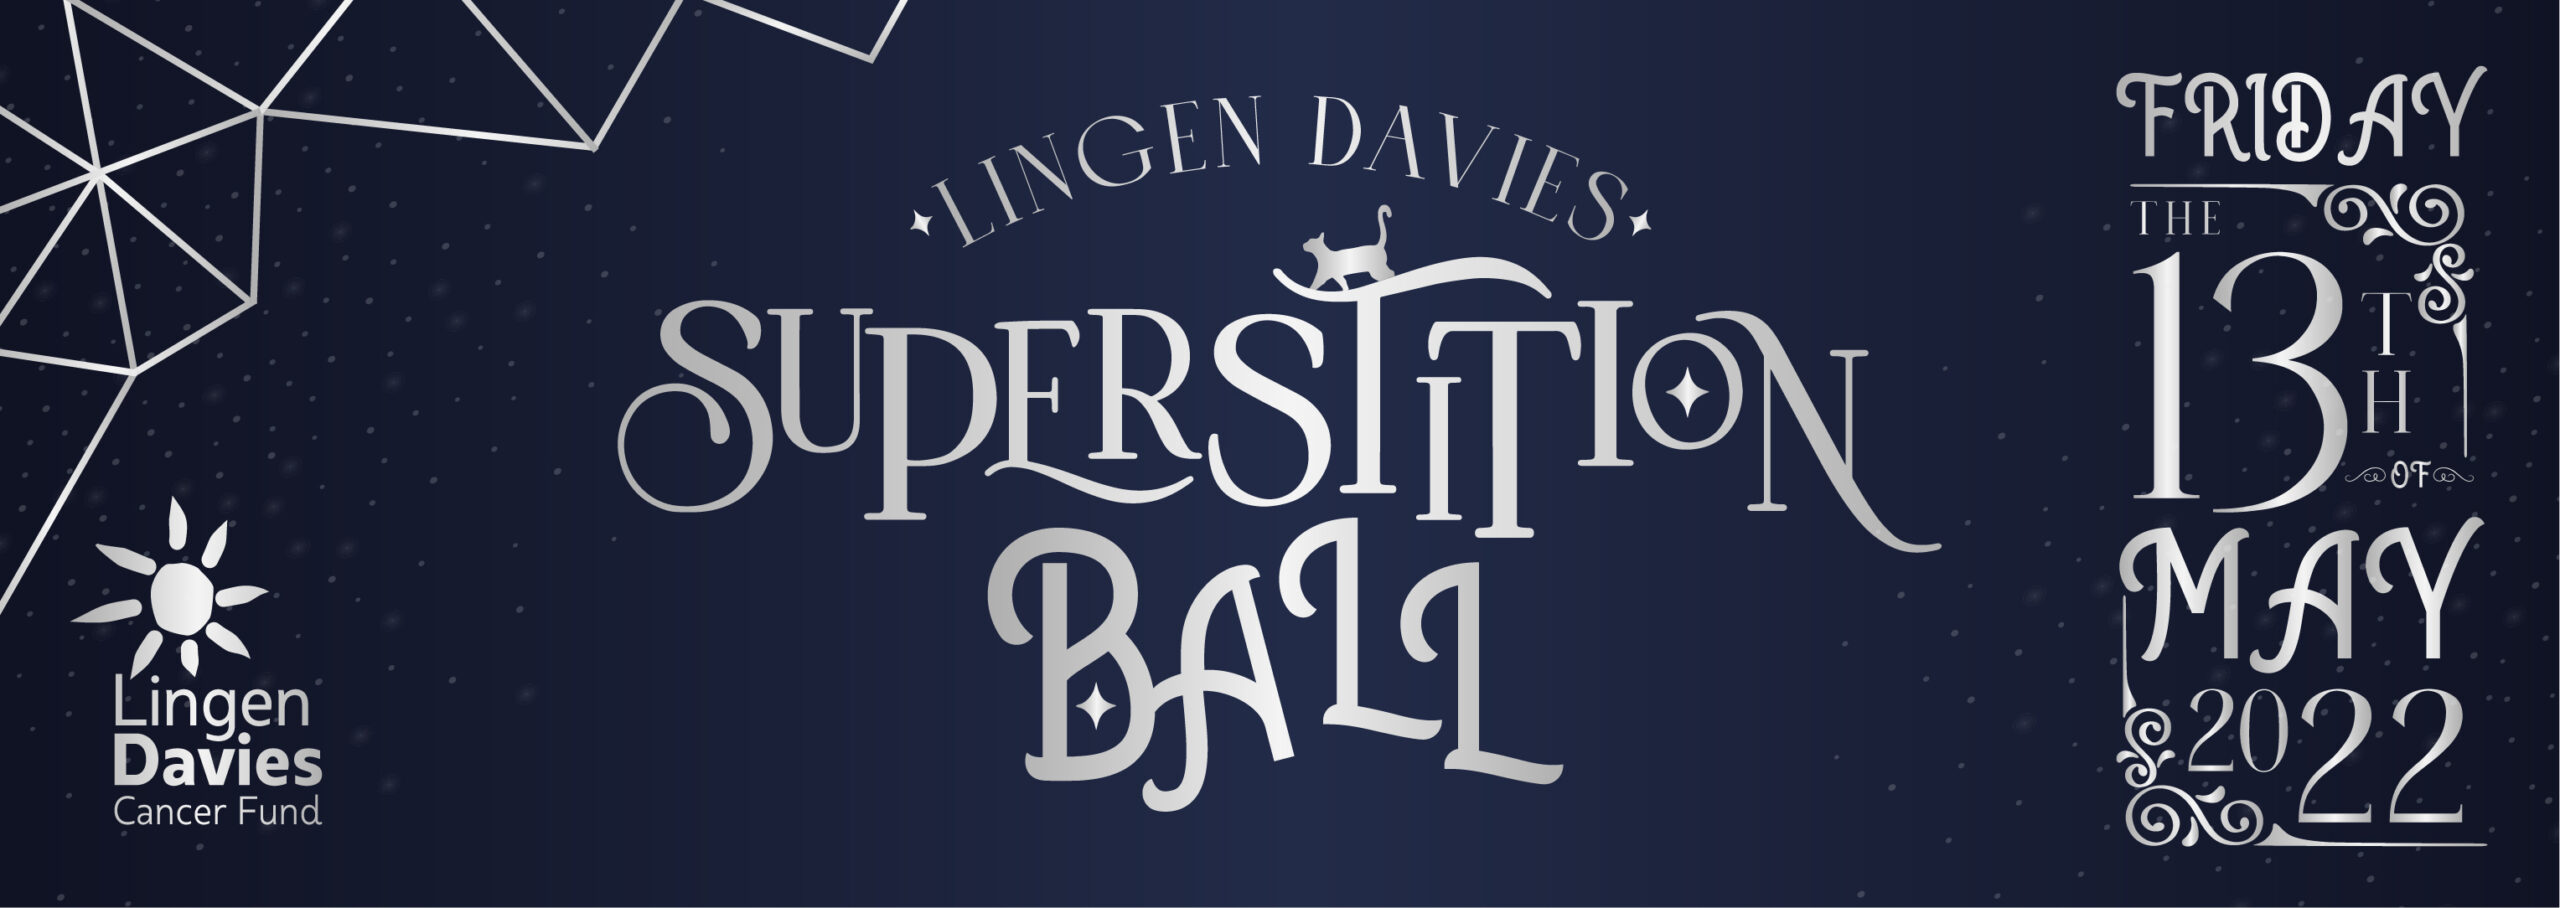 Superstition Ball